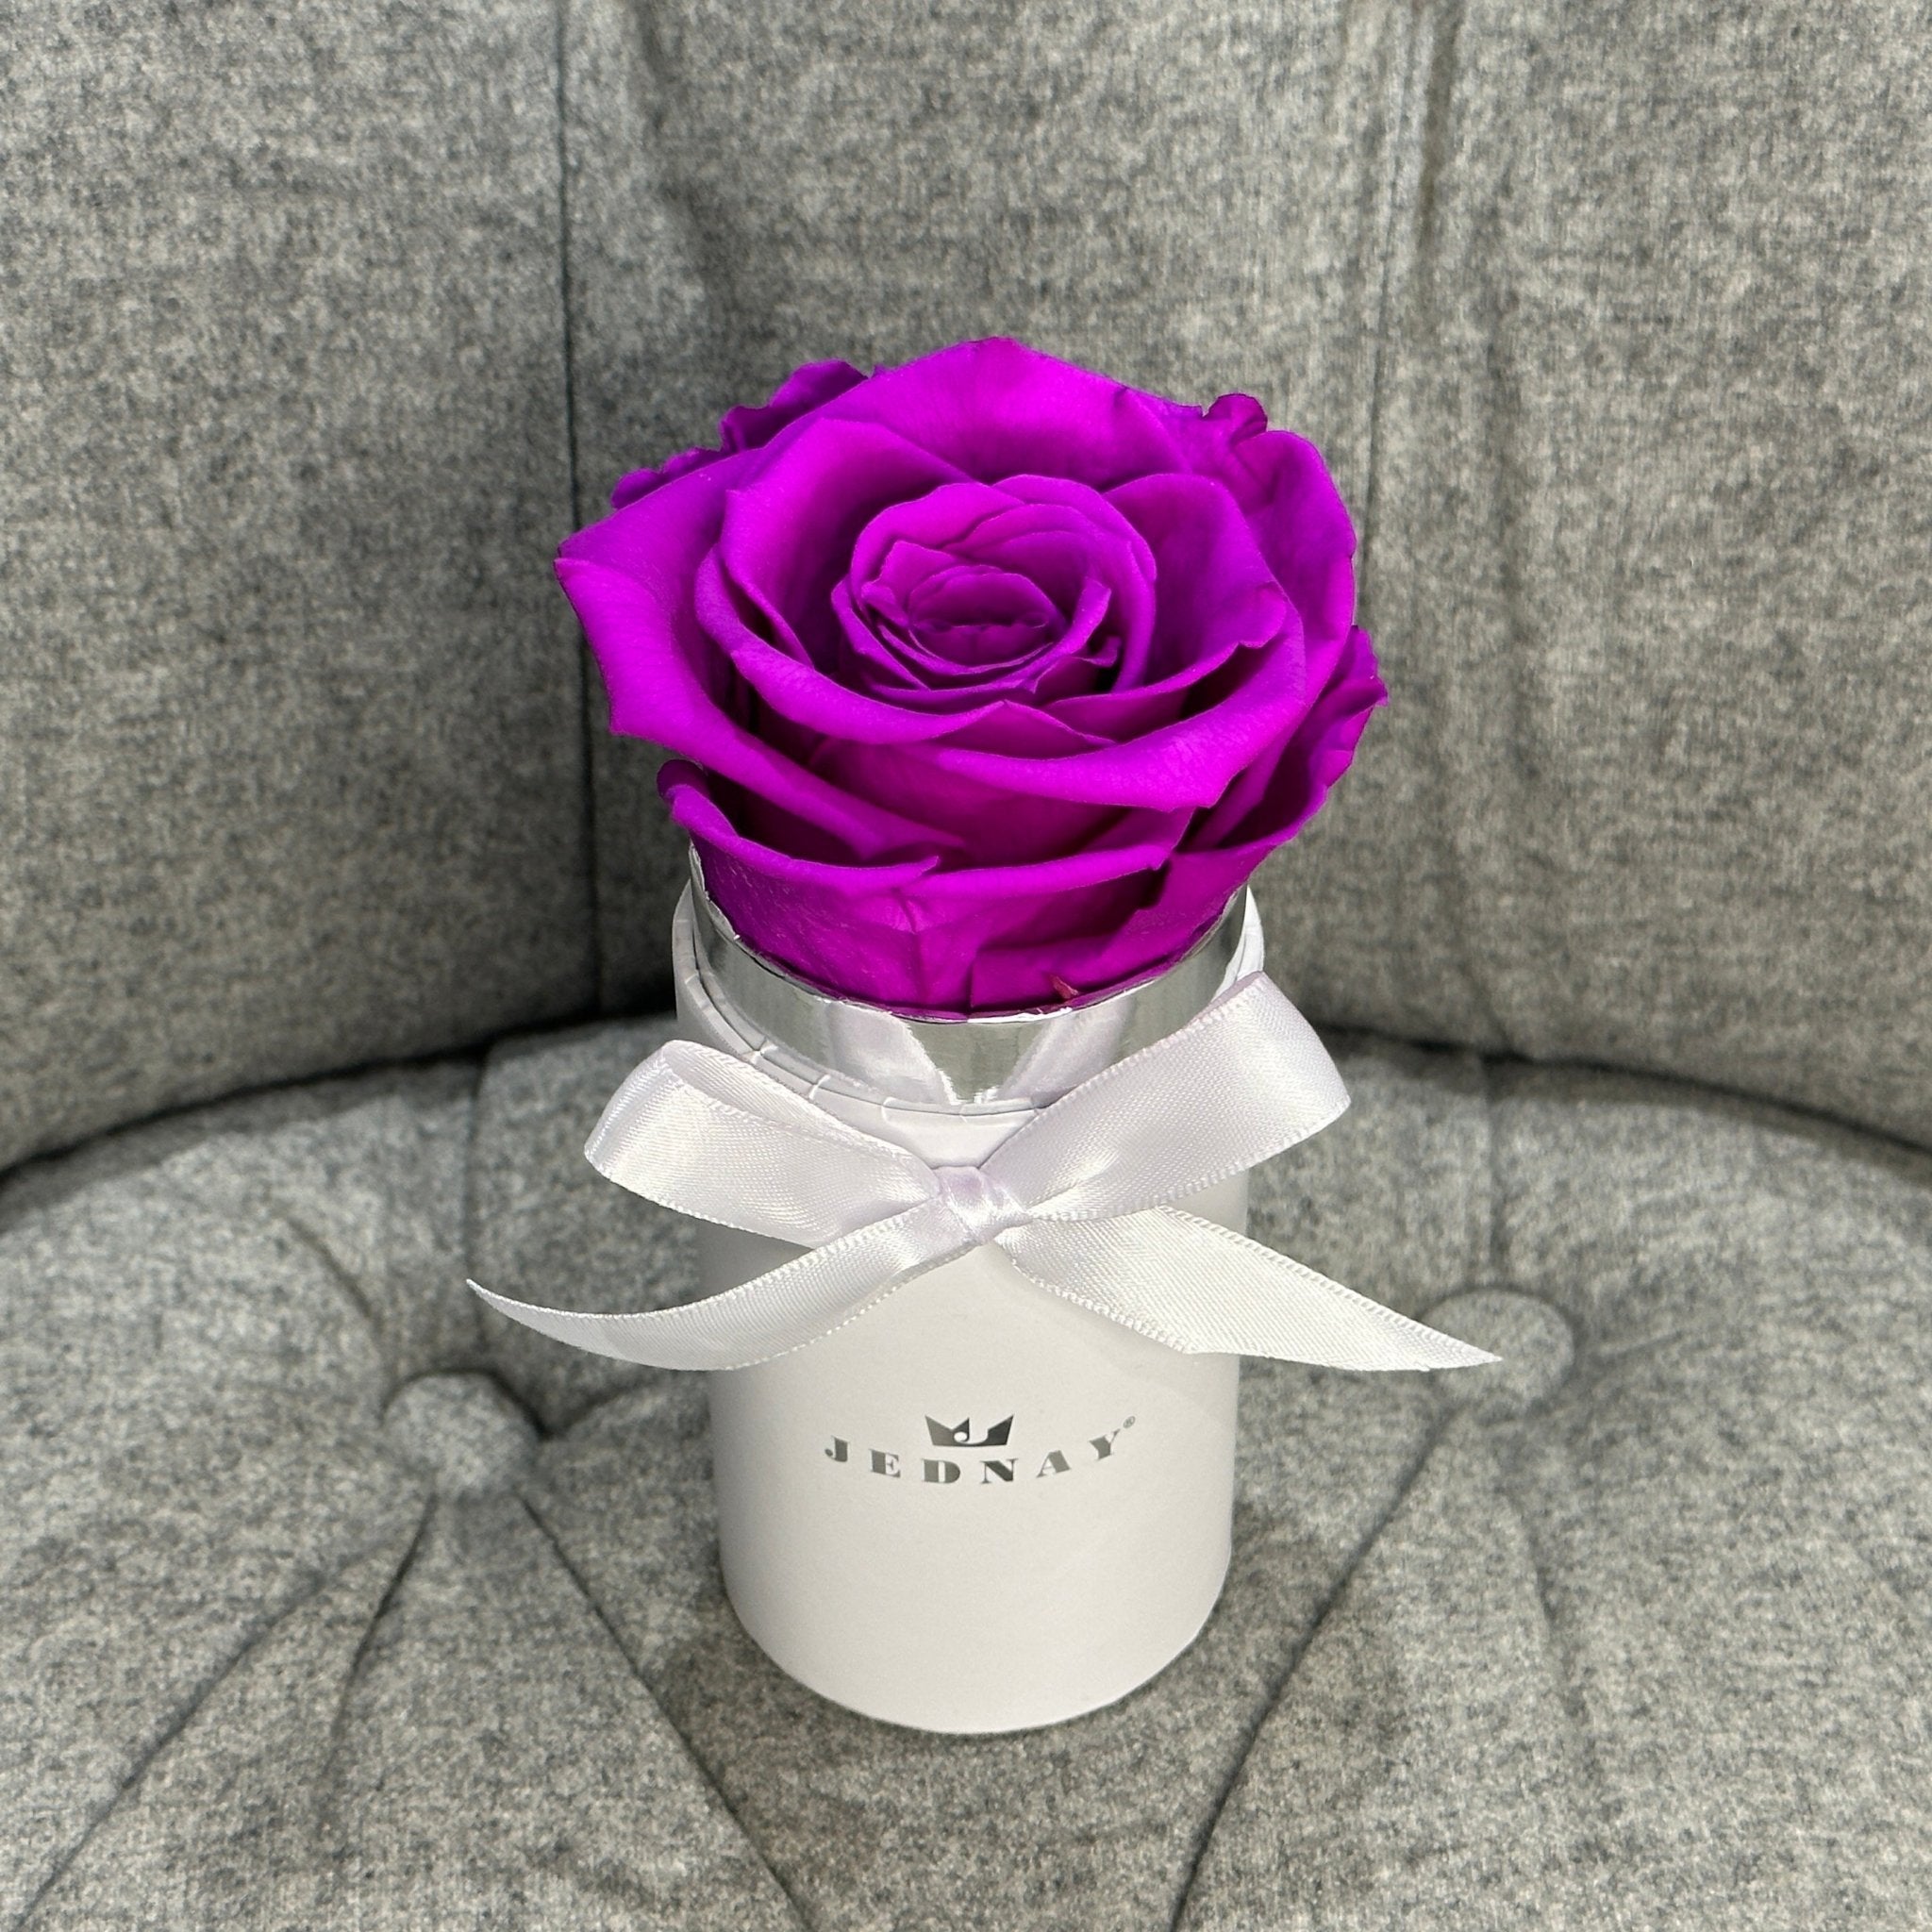 The Uno - Purple Rain Eternal Rose - Classic White Box - Jednay Roses